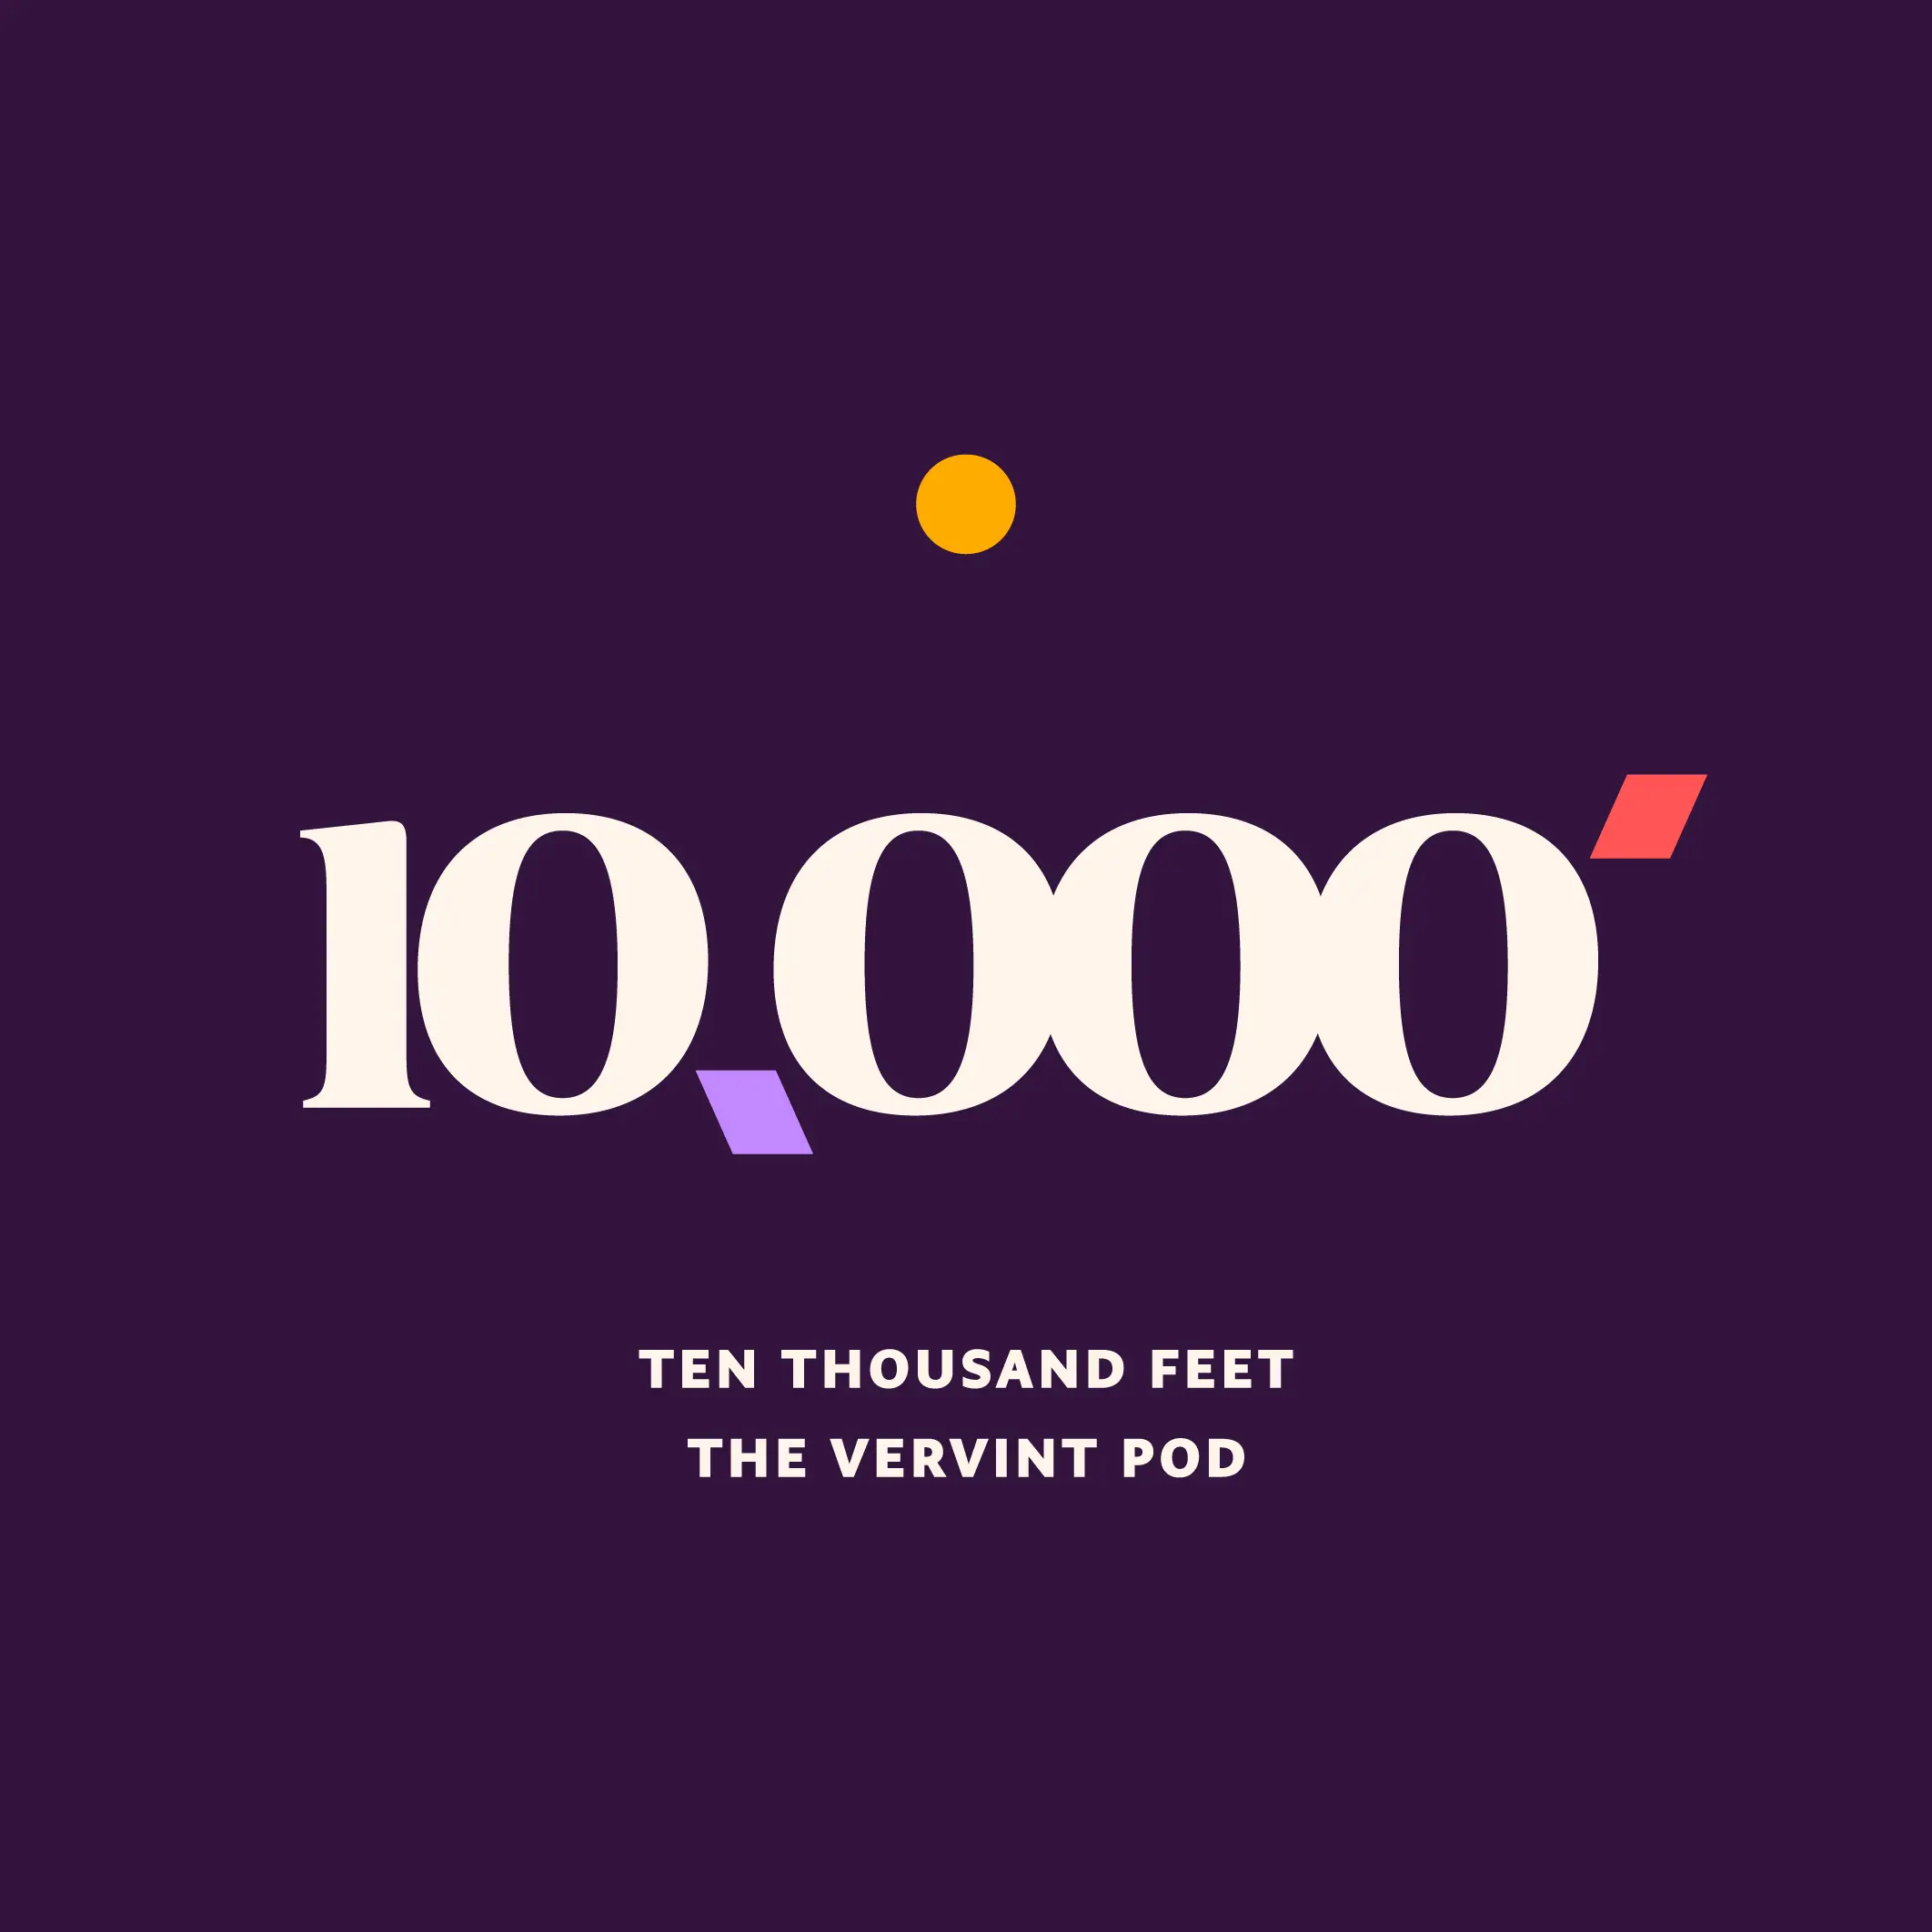 The Vervint Podcast: Ten Thousand Feet.